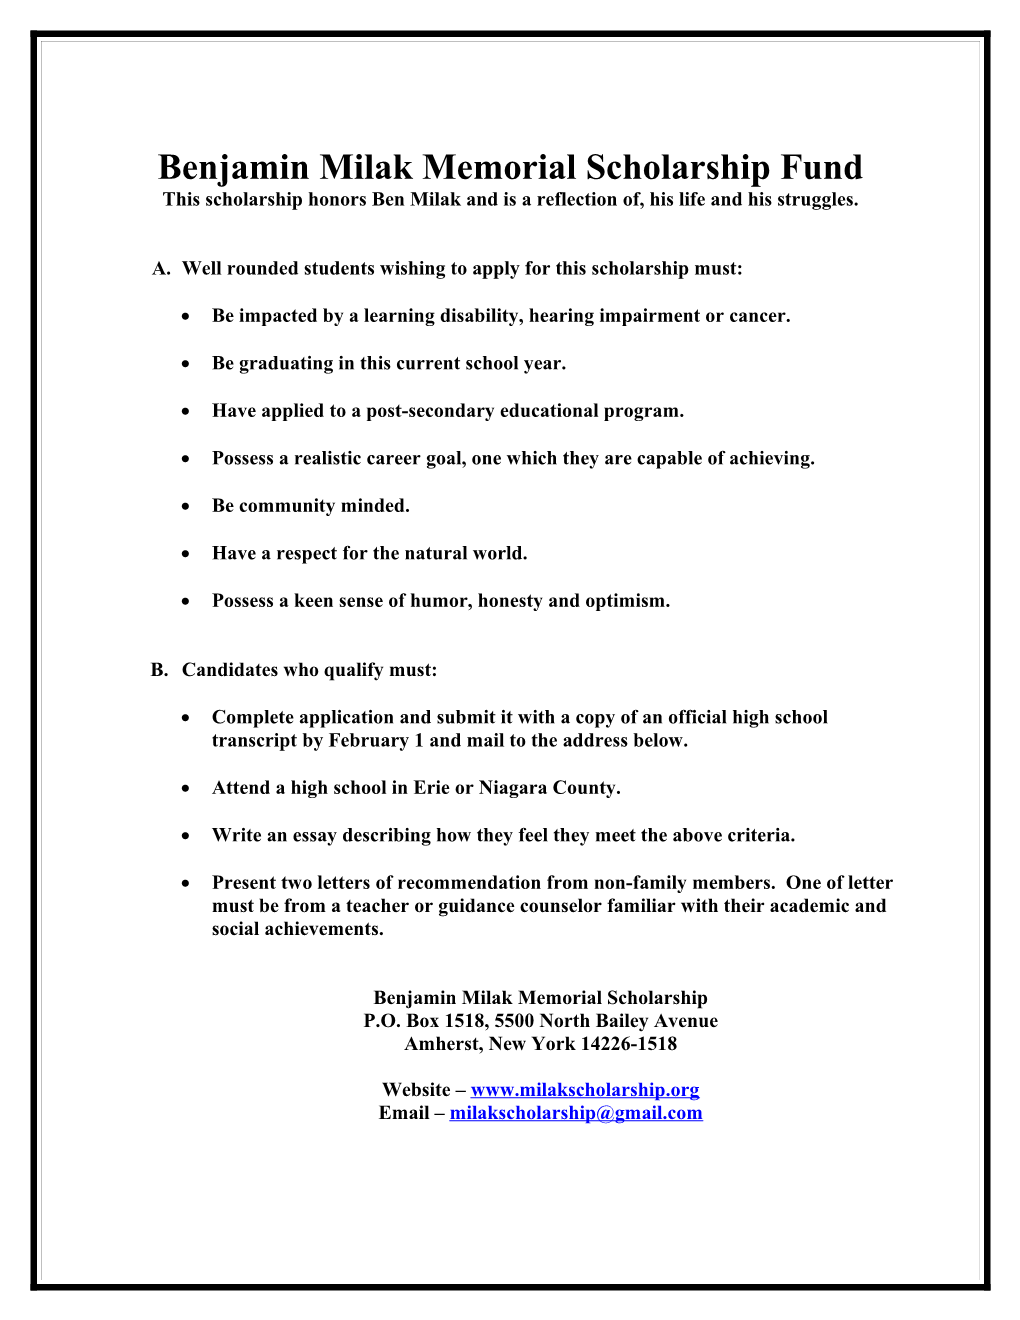 Benjamin Milak Memorial Scholarship Fund